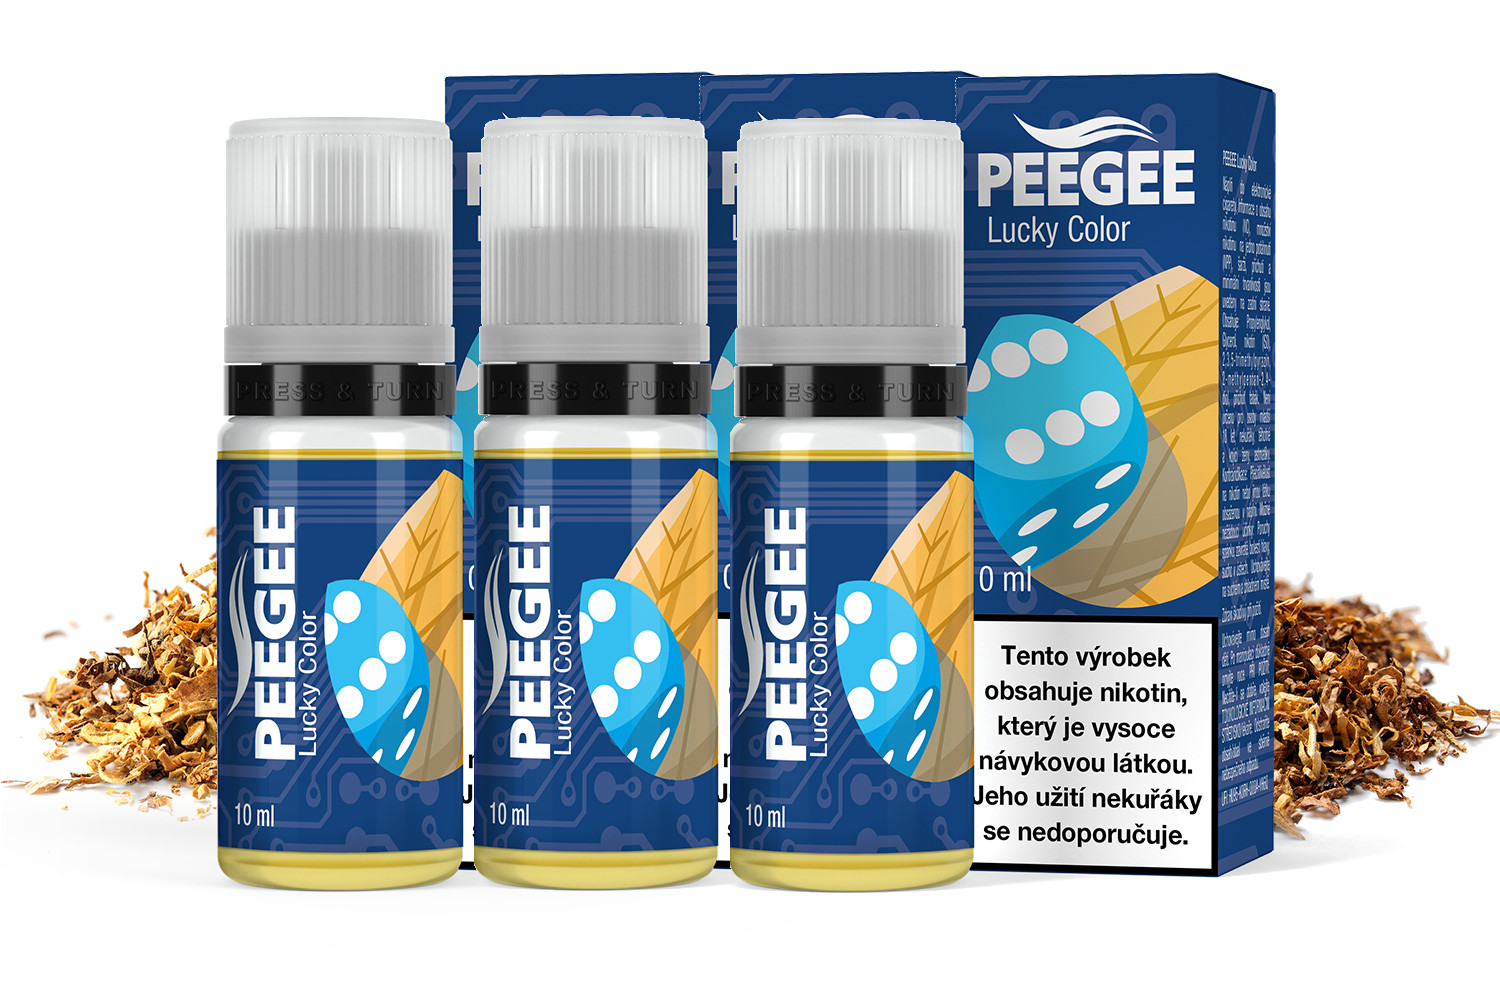 PEEGEE - Lucky Color 3x10ml Obsah nikotinu: 12mg